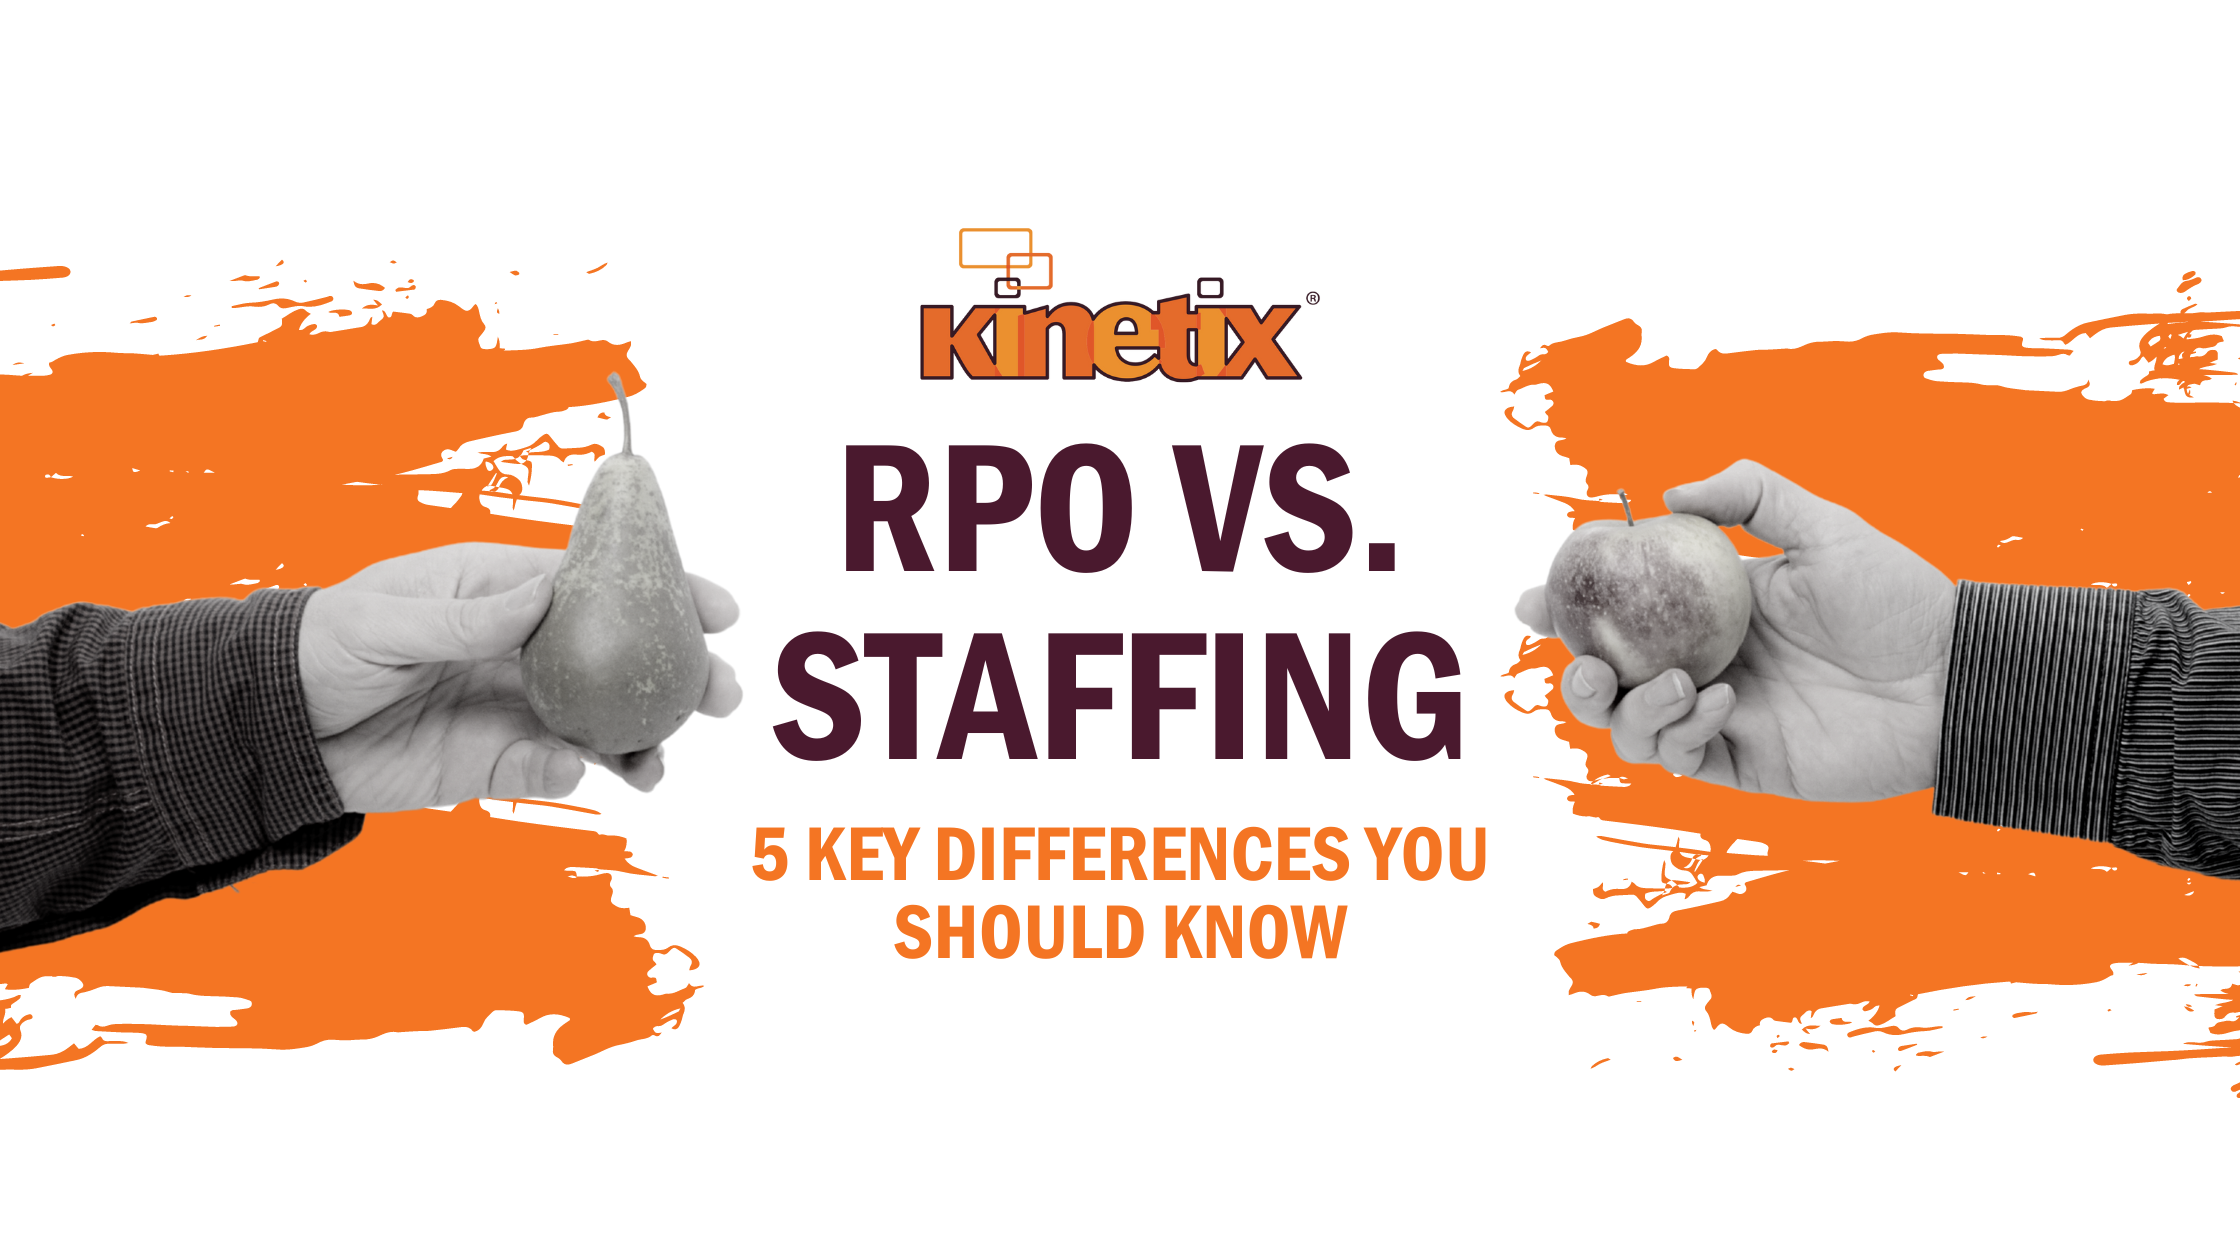 RPO vs. Staffing: 7 Key Differences That Sets Them Apart